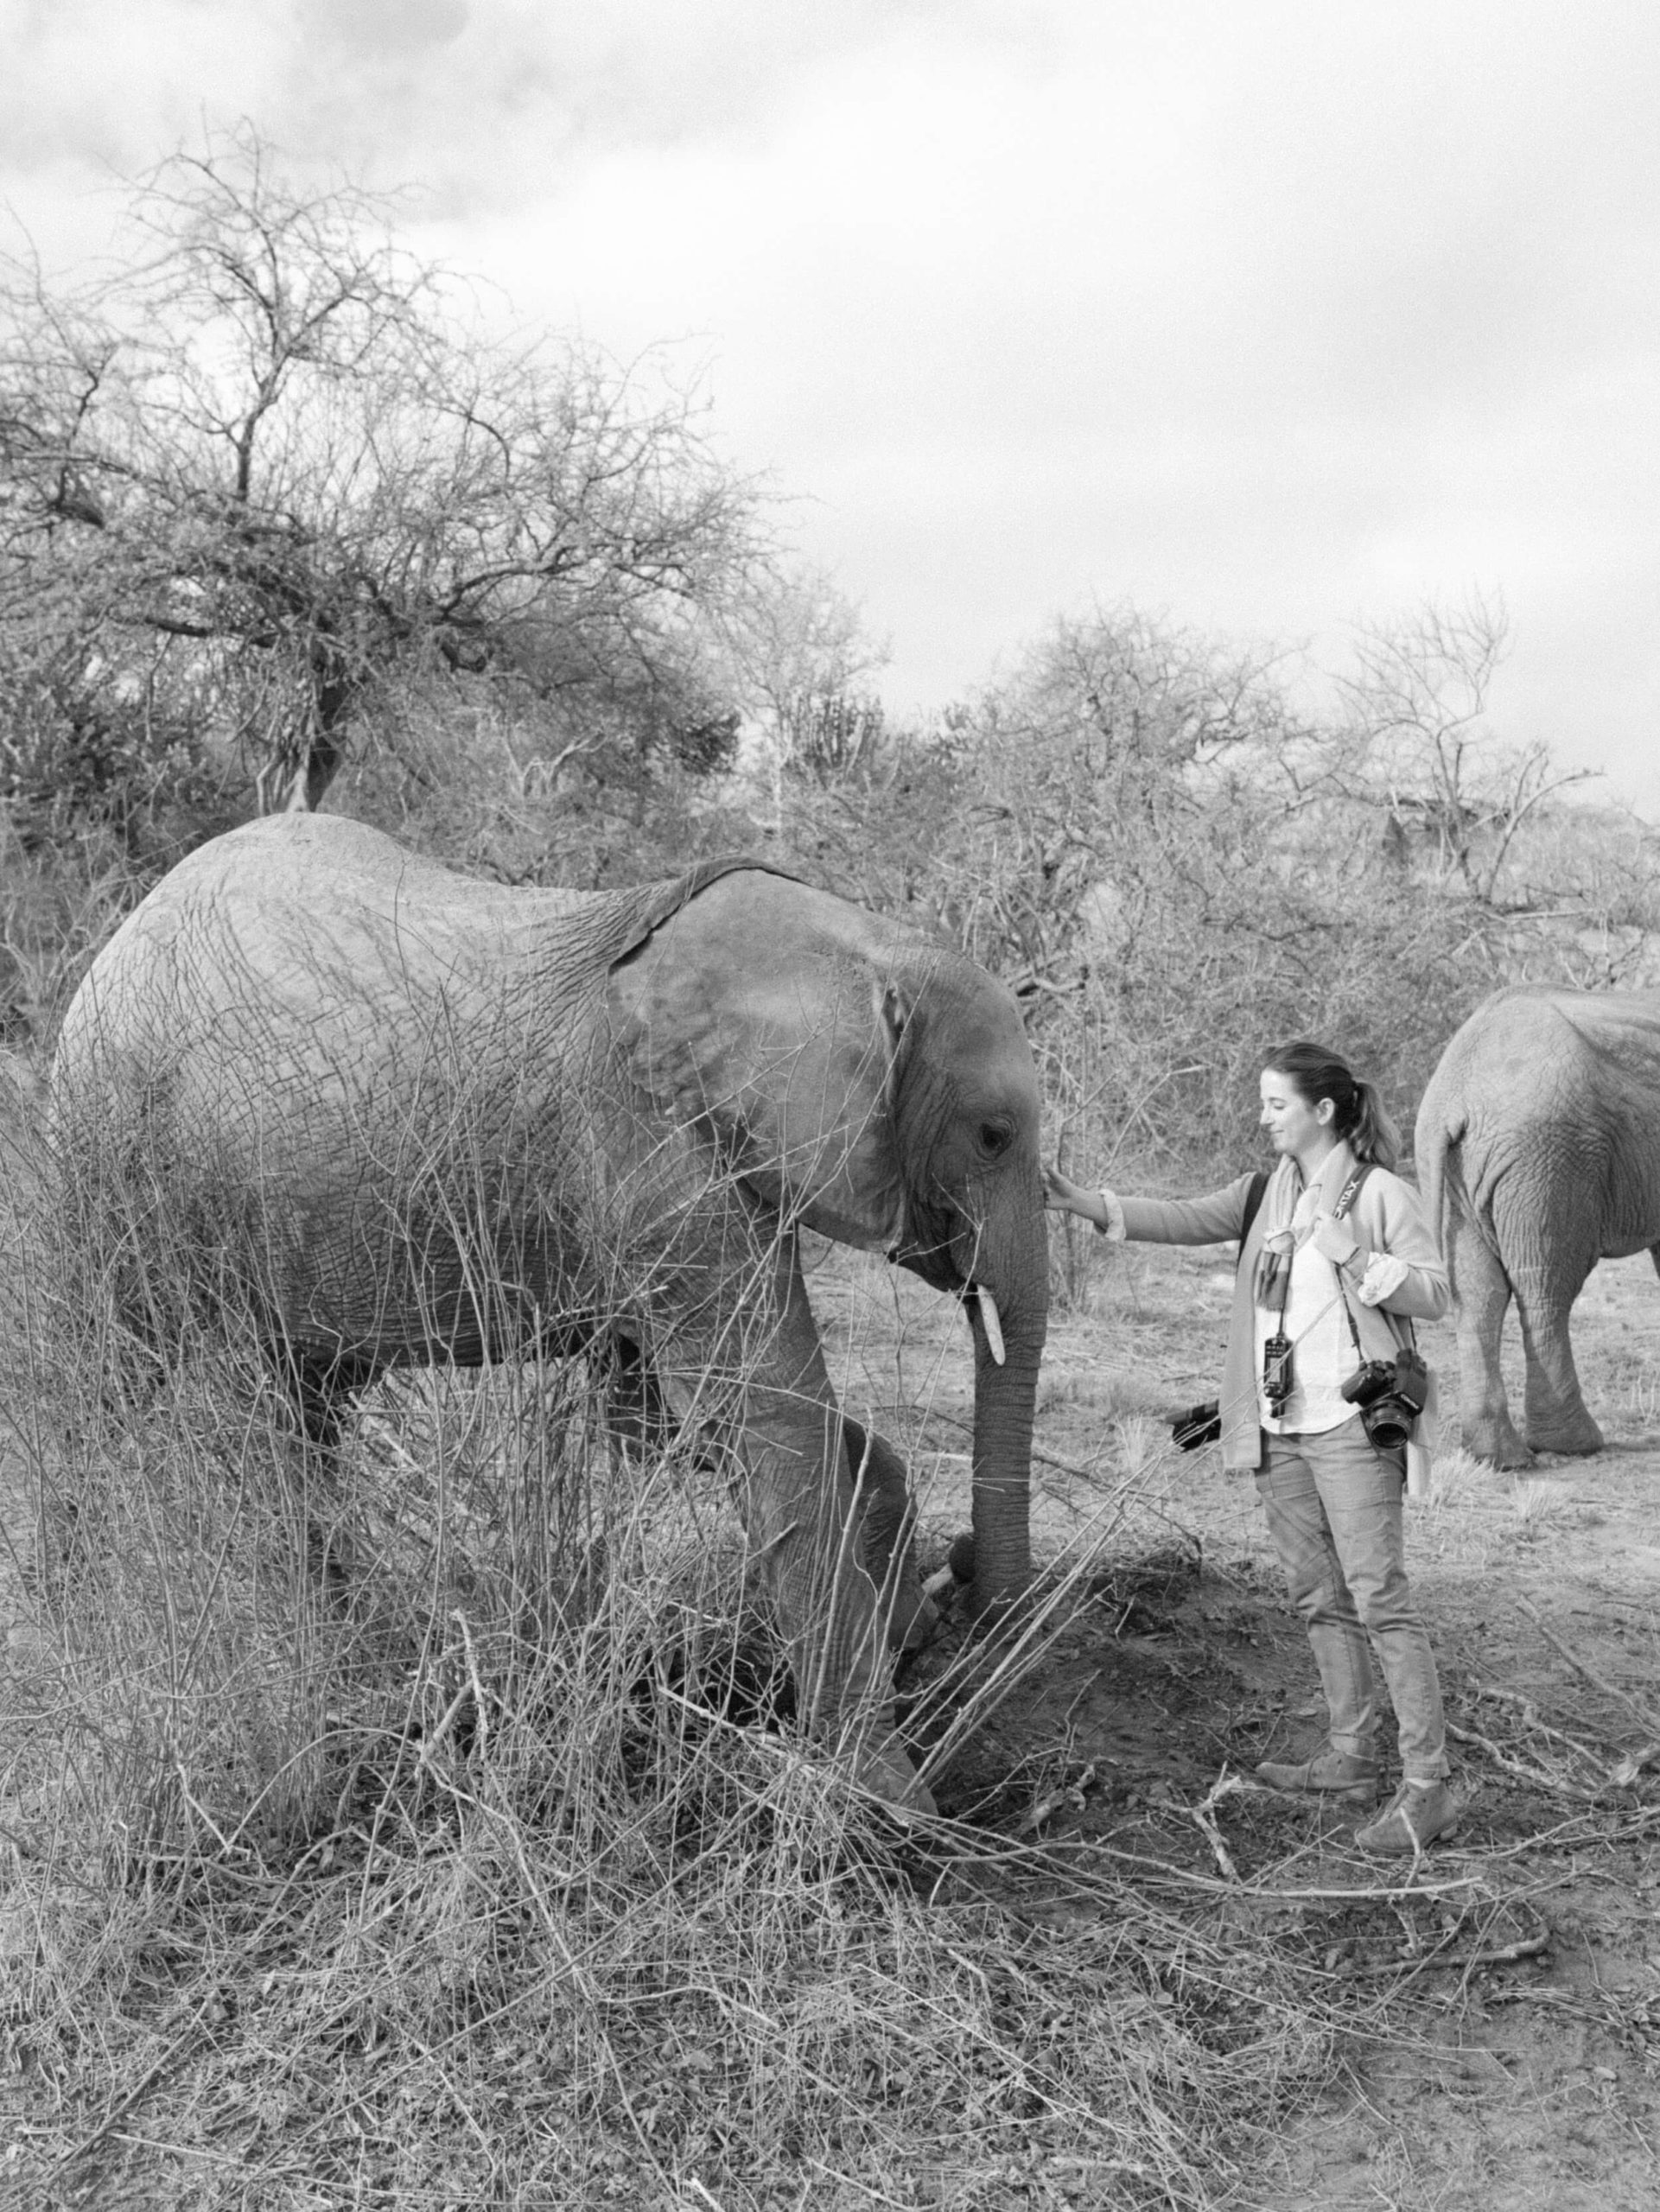 KT Merry photographs elephants at Sheldrick Wildlife Trust in Kenya, Africa